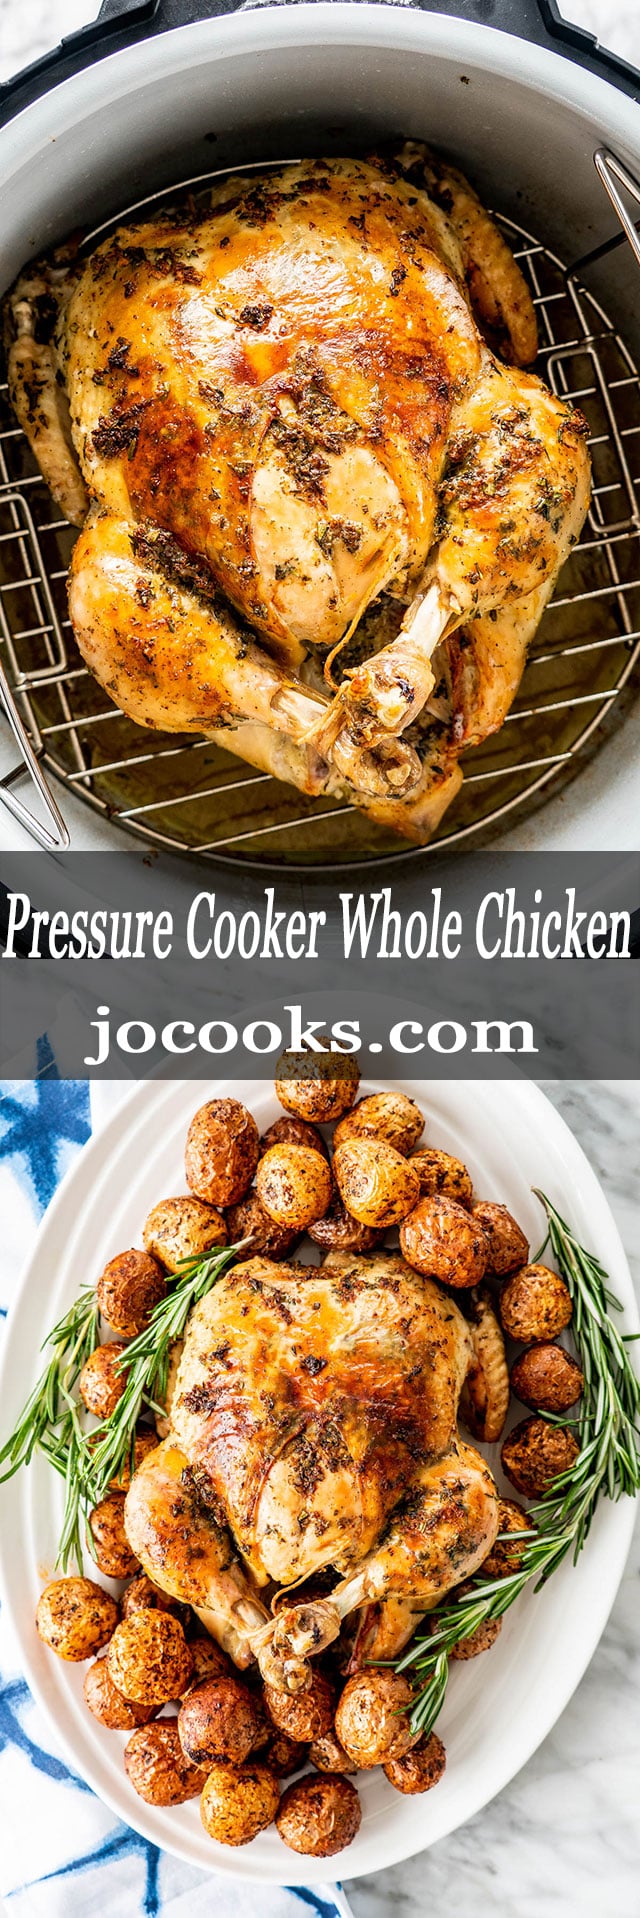 https://www.jocooks.com/wp-content/uploads/2019/04/pressure-cooker-whole-chicken.jpg